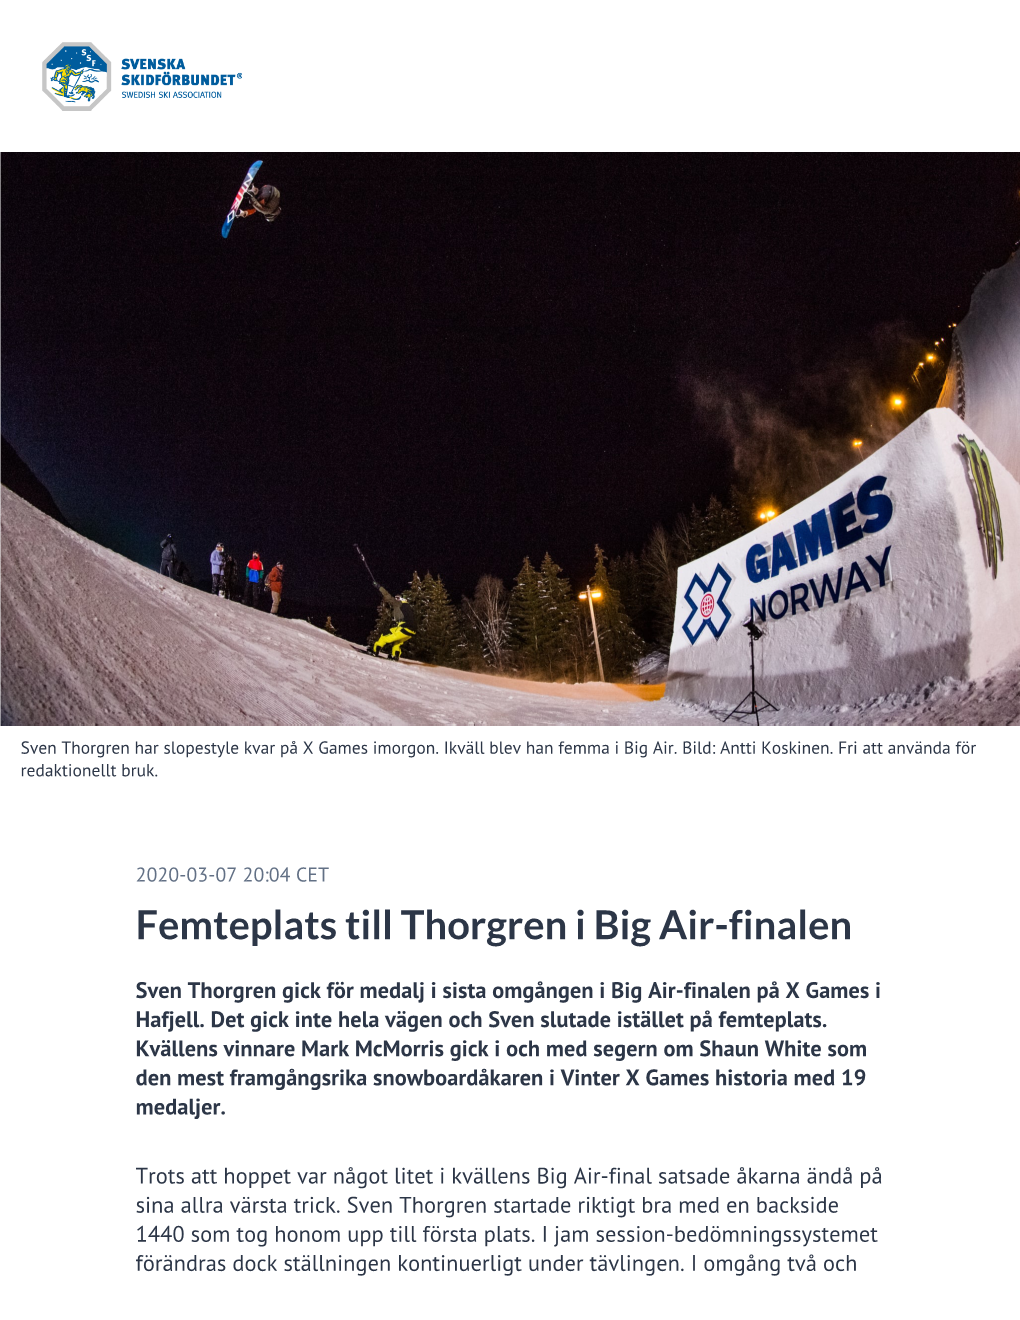 Femteplats Till Thorgren I Big Air-Finalen